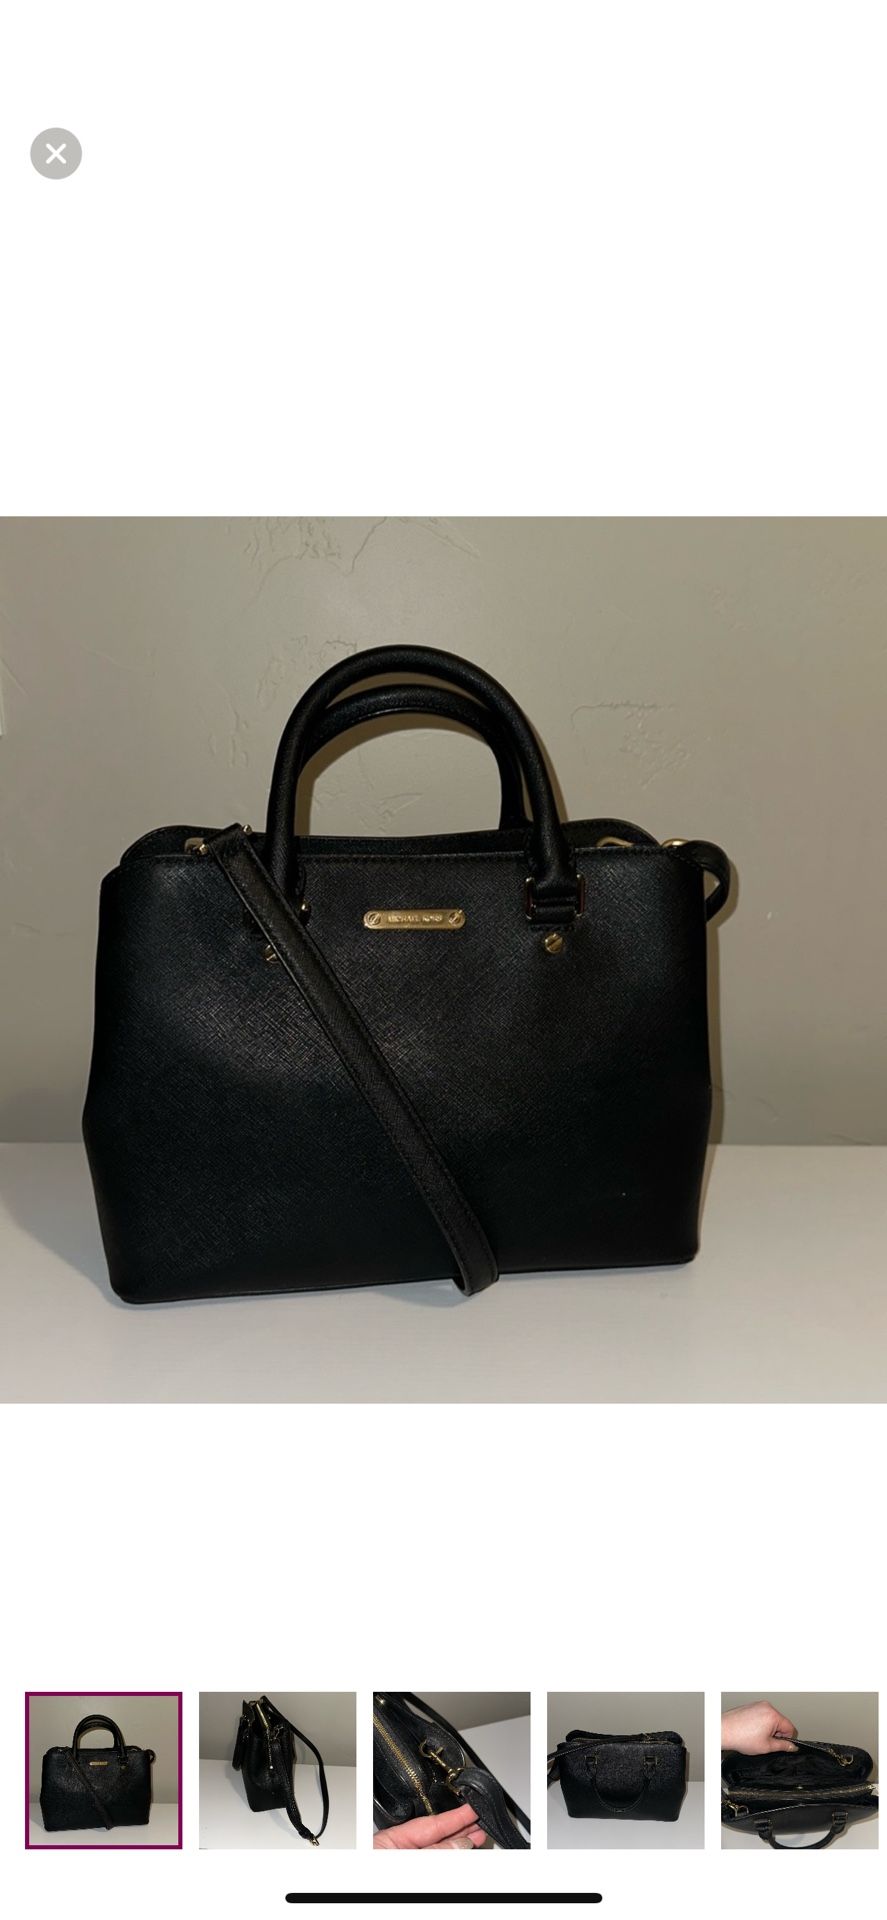 Michael Kors Black Saffiano Leather Two Way Bag